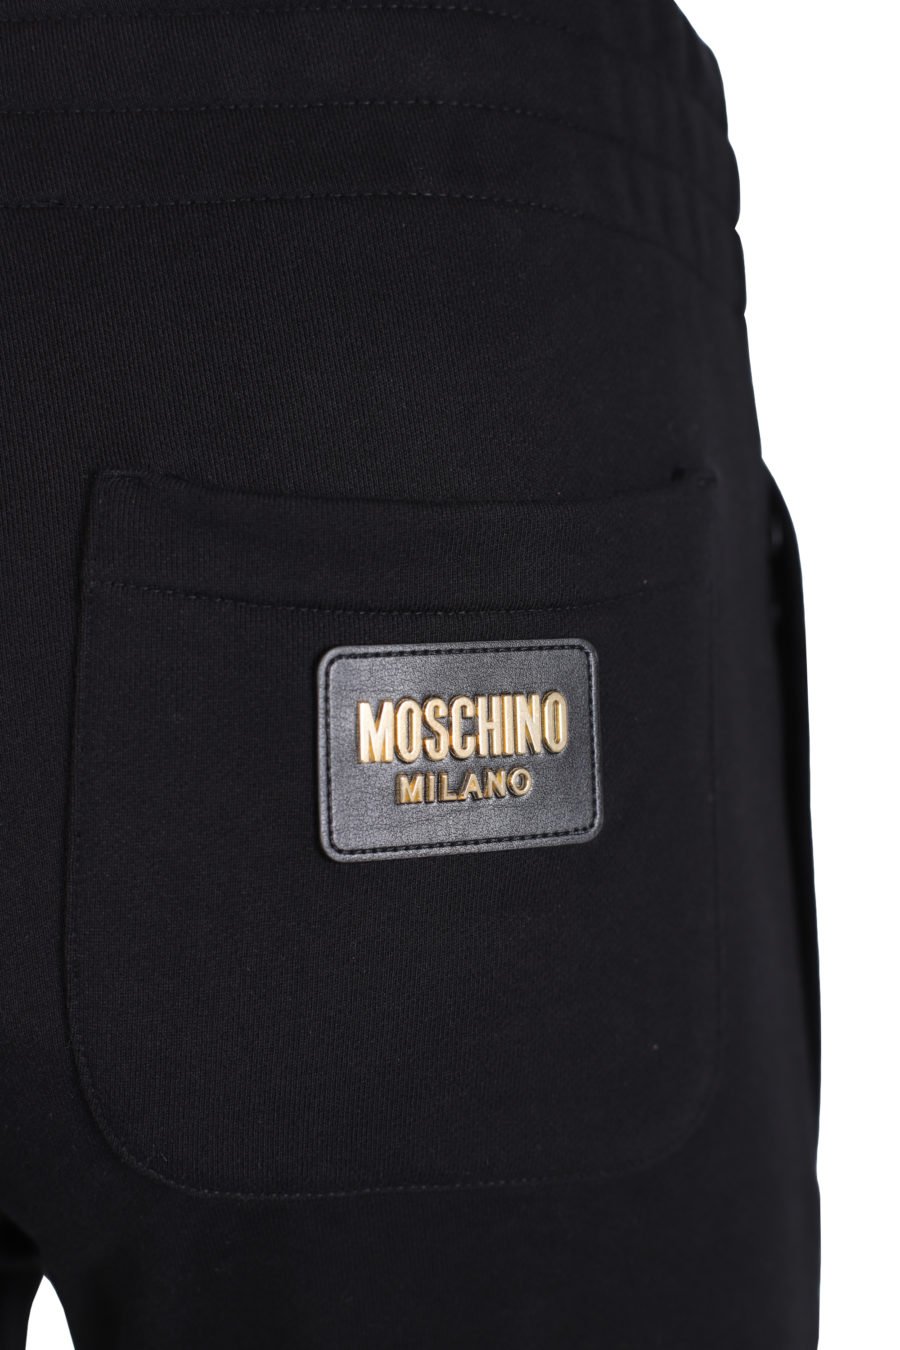 Pantalon long noir avec logo doré au dos - IMG 1438